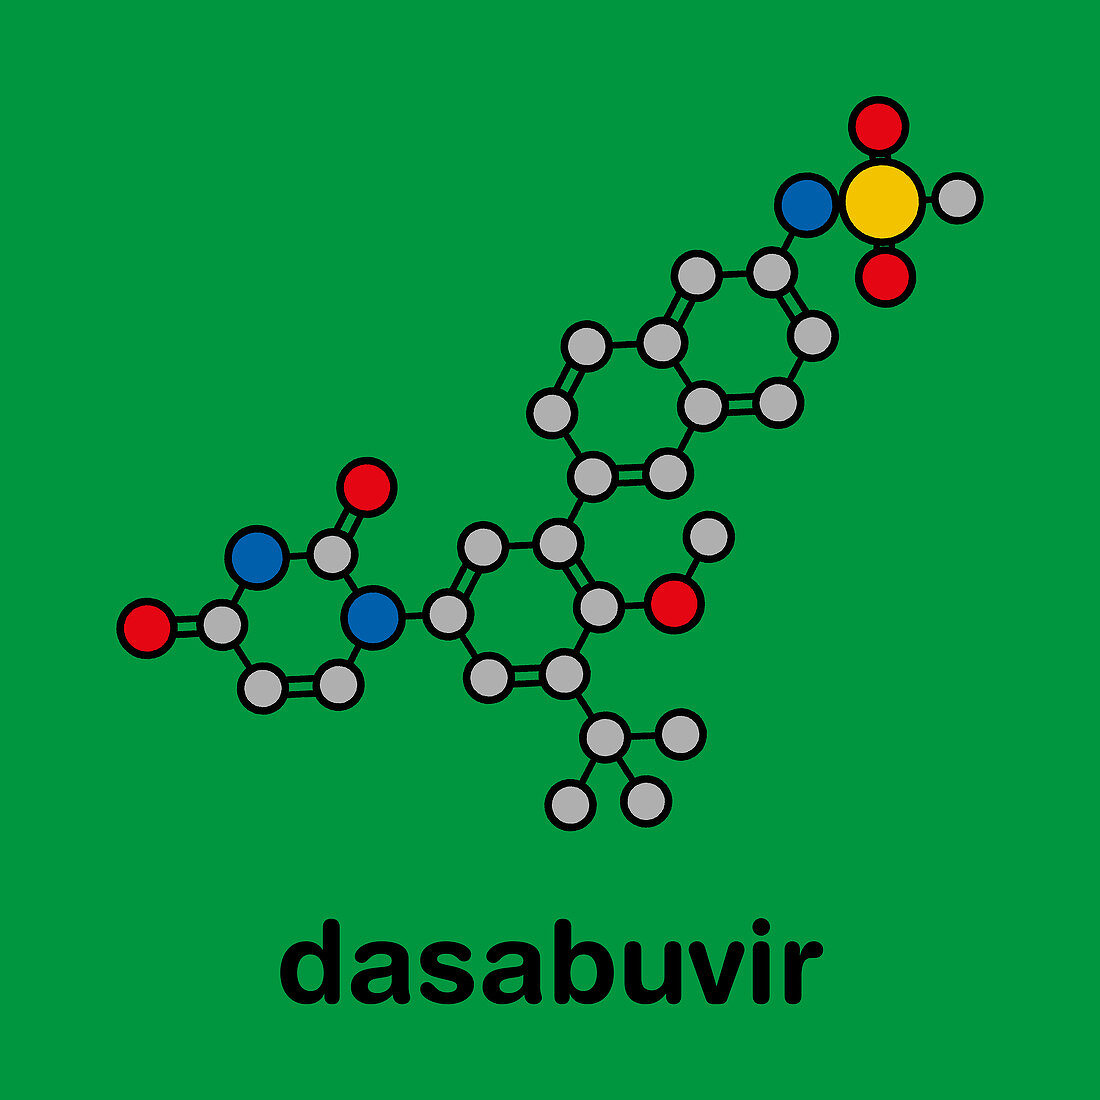 Dasabuvir hepatitis C virus drug molecule, illustration